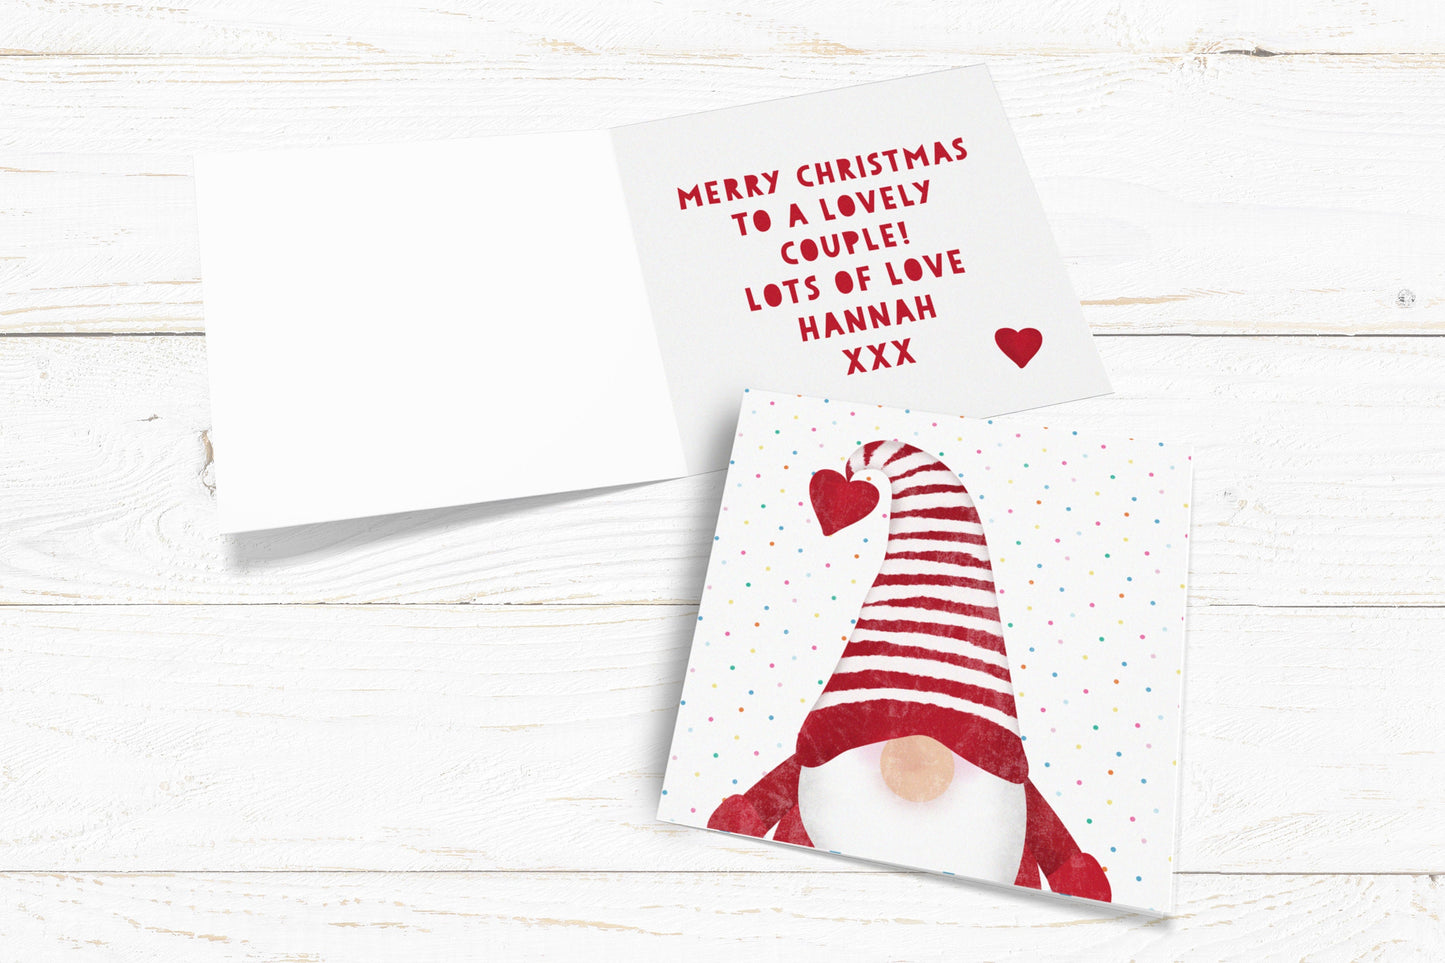 Cute Santa Gonk Christmas Card. Father Christmas Card. Happy Holidays. Cute Santa. Cute Christmas Card. Send Direct Option.